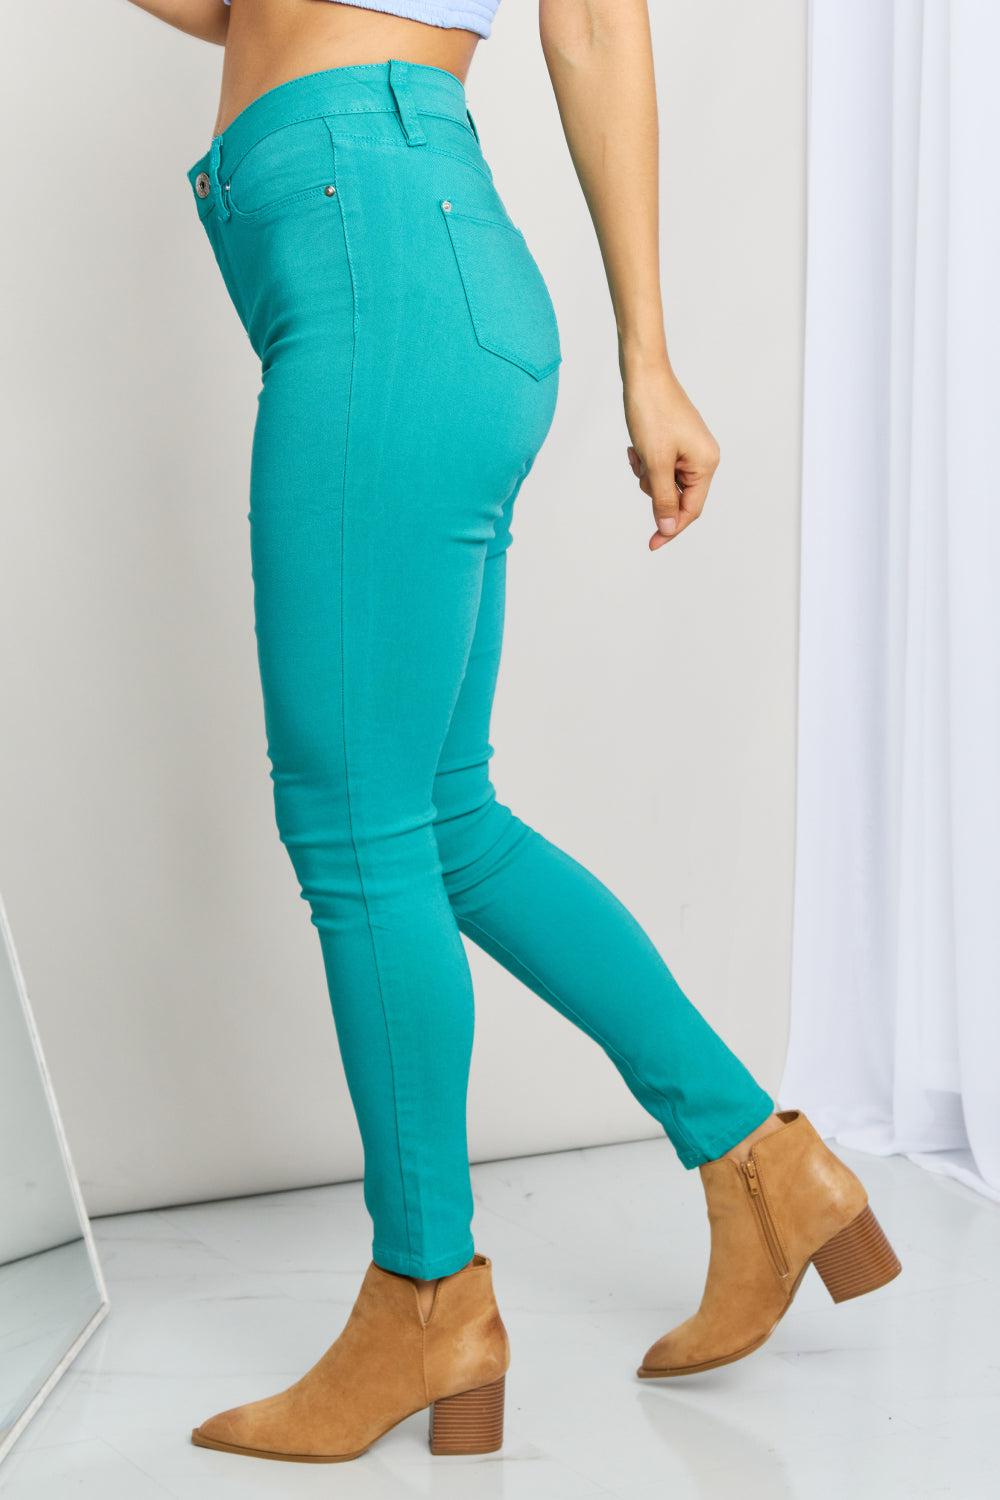 YMI Jeanswear Kate Hyper-Stretch Full Size Mid-Rise Skinny Jeans in Sea Green BLUE ZONE PLANET